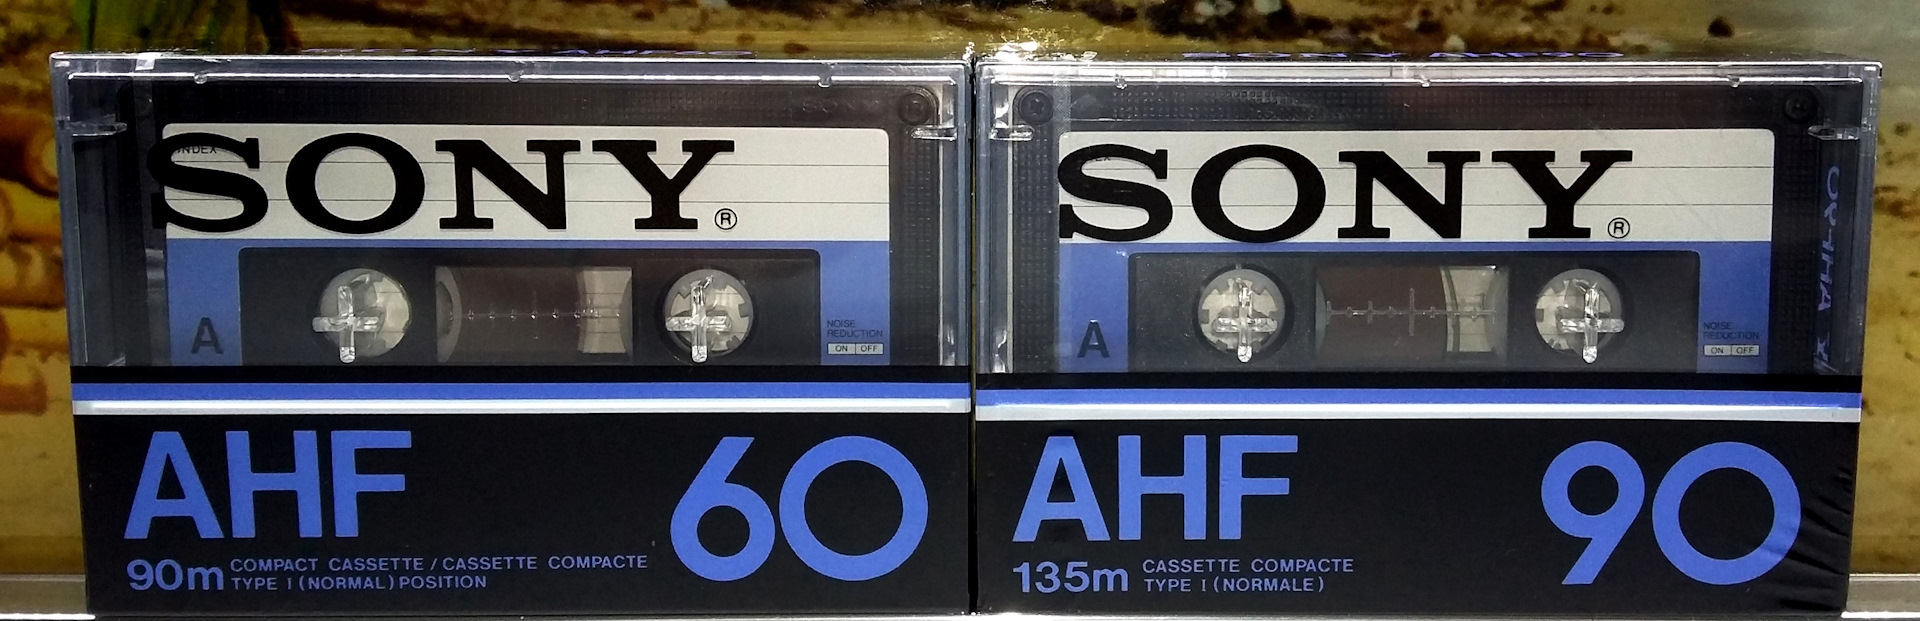 Каталог аудиокассет. Аудиокассеты Sony. Каталог аудиокассет Sony. Типы аудиокассет Sony.